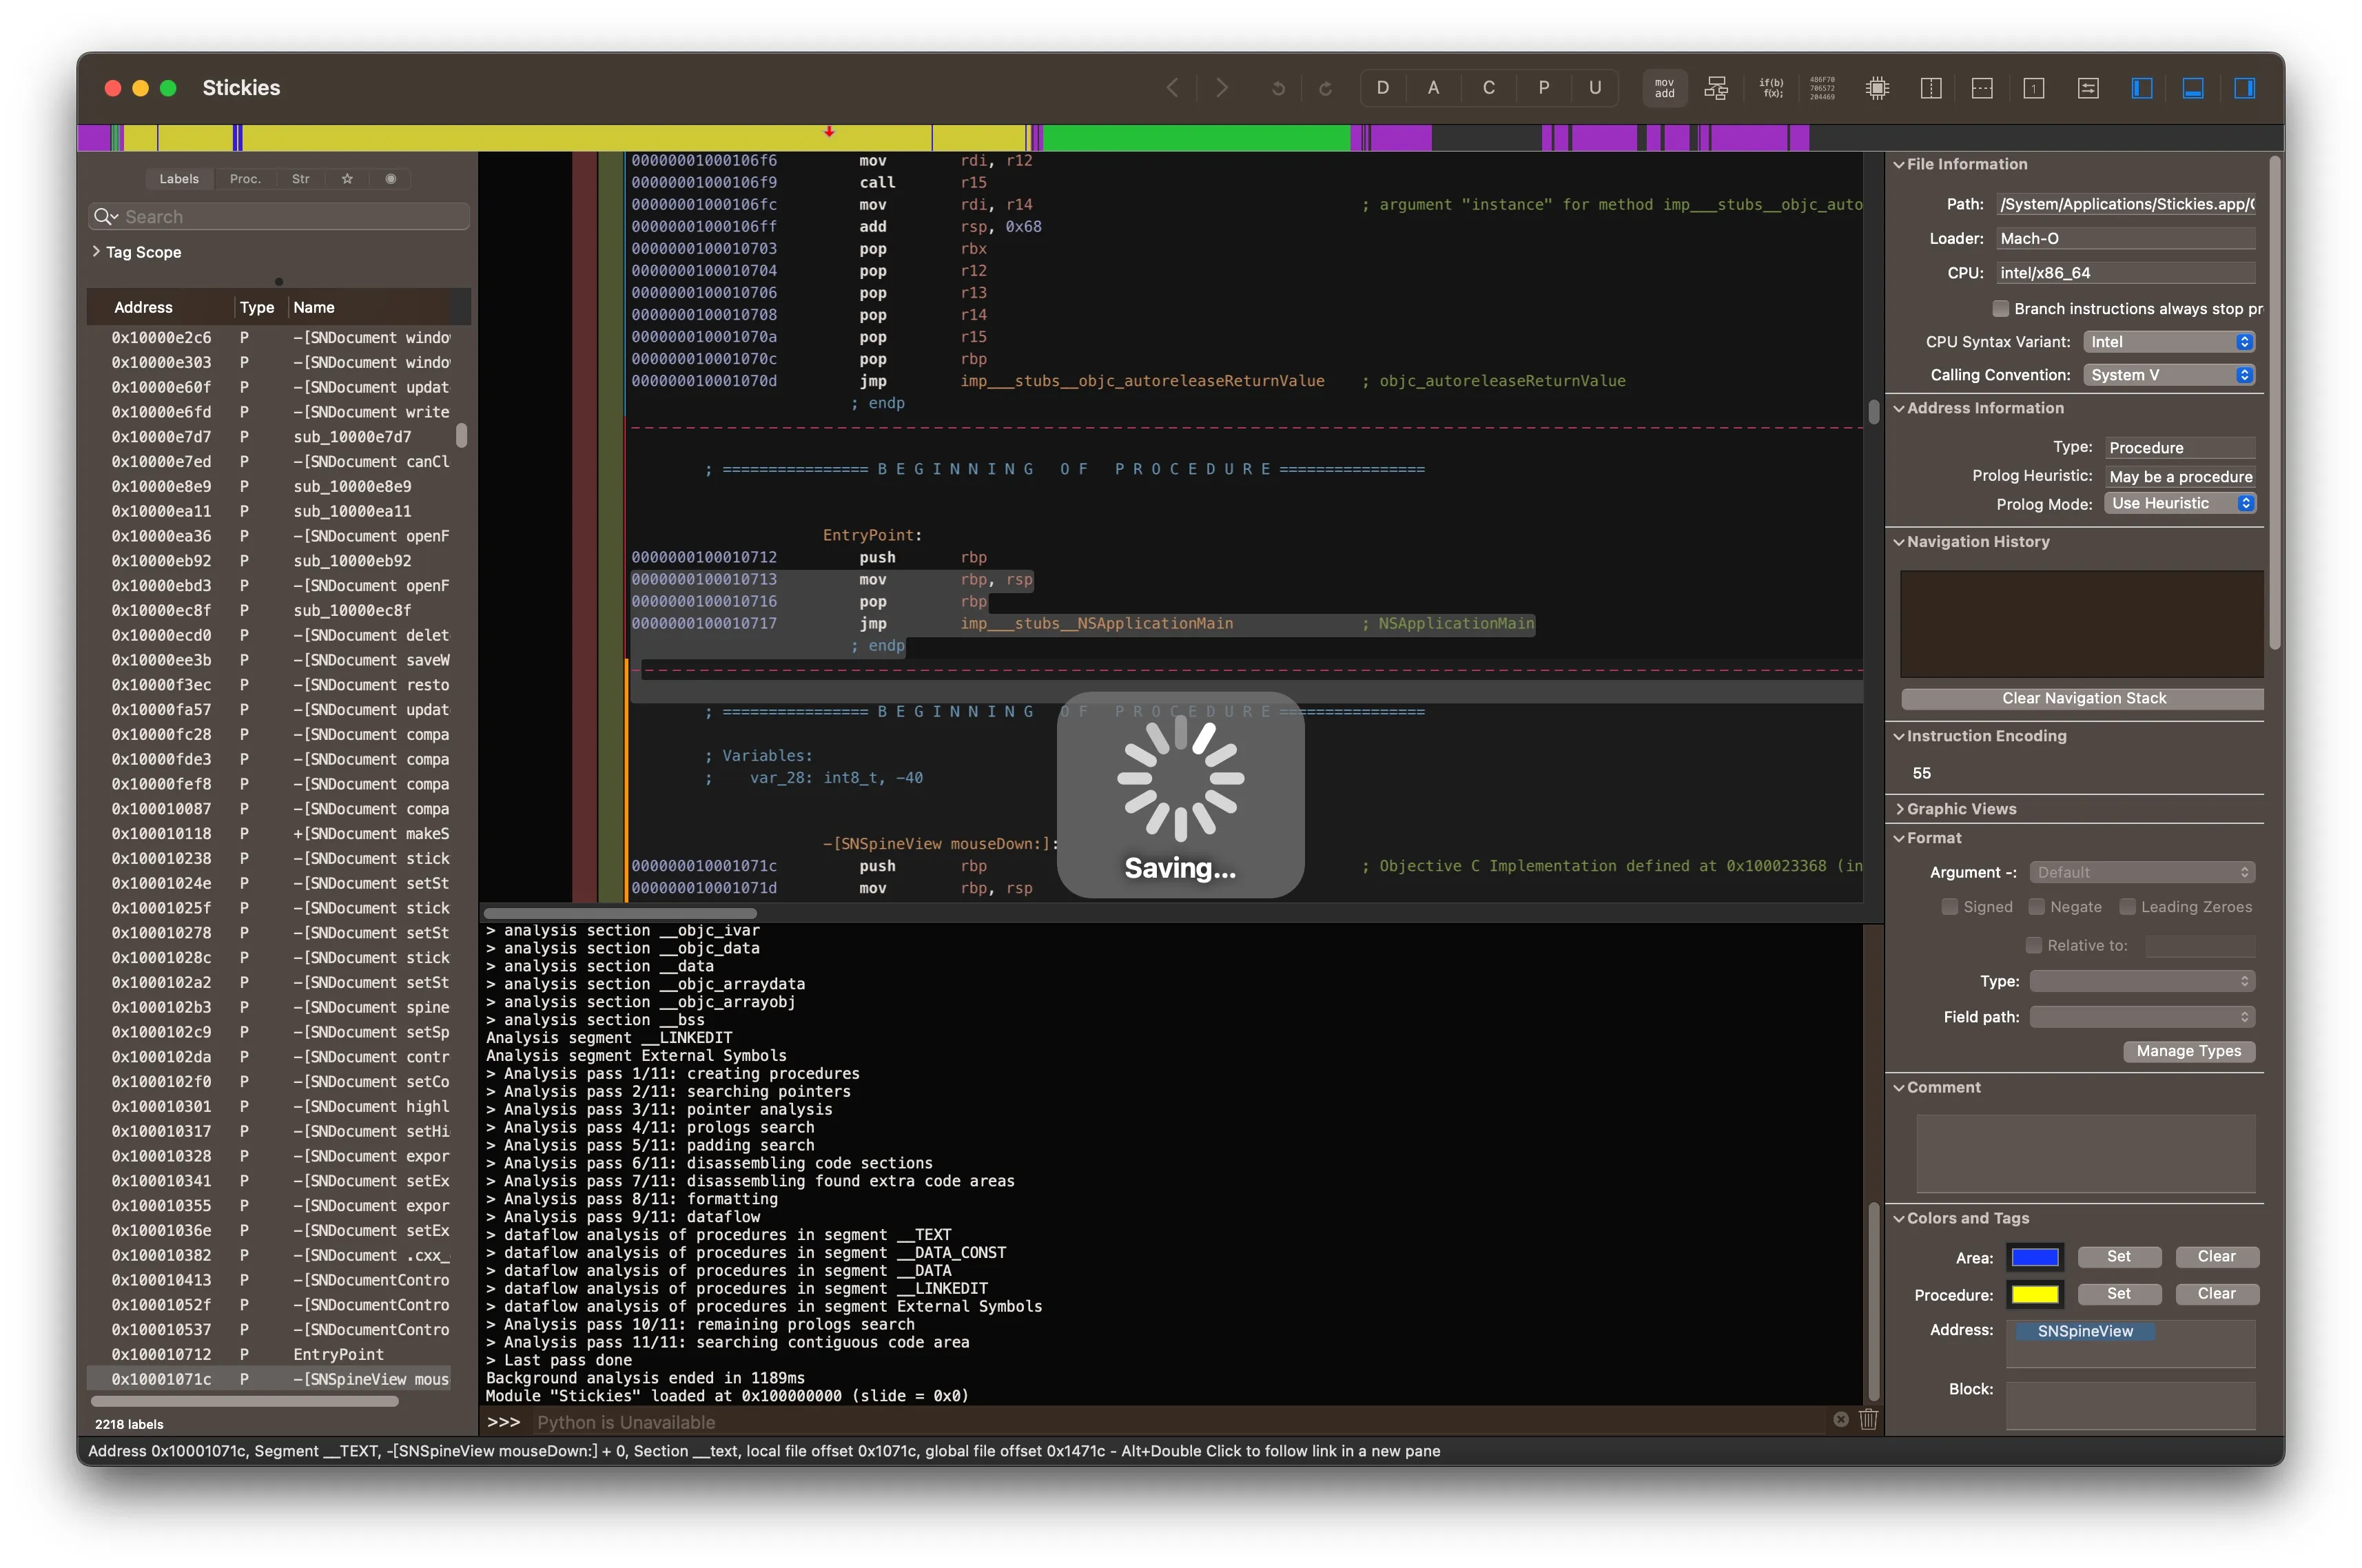 Hopper Disassembler v4 5.13.5 破解版 - 逆向工程/反汇编工具 2024元旦算码活动 | 编程工具